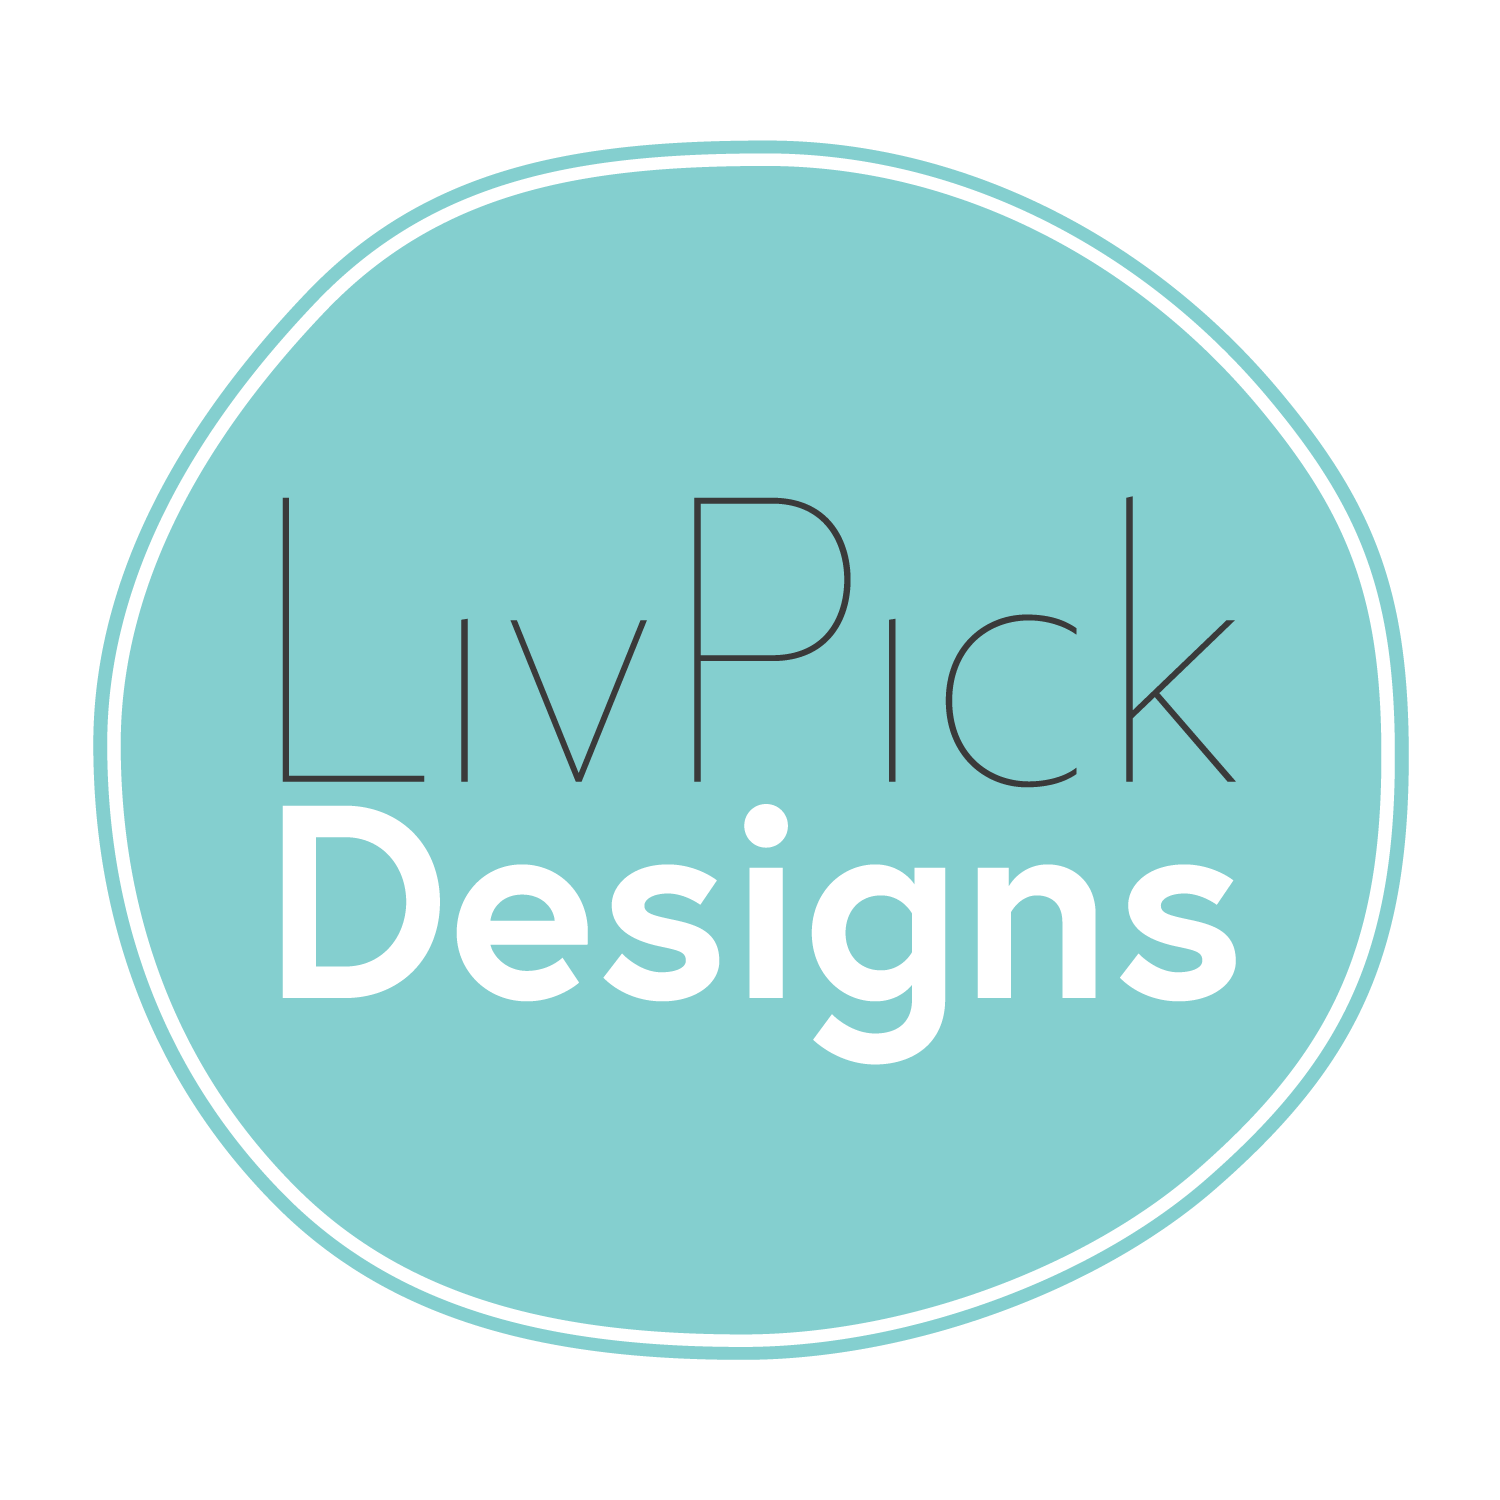 Liv Pick Designs